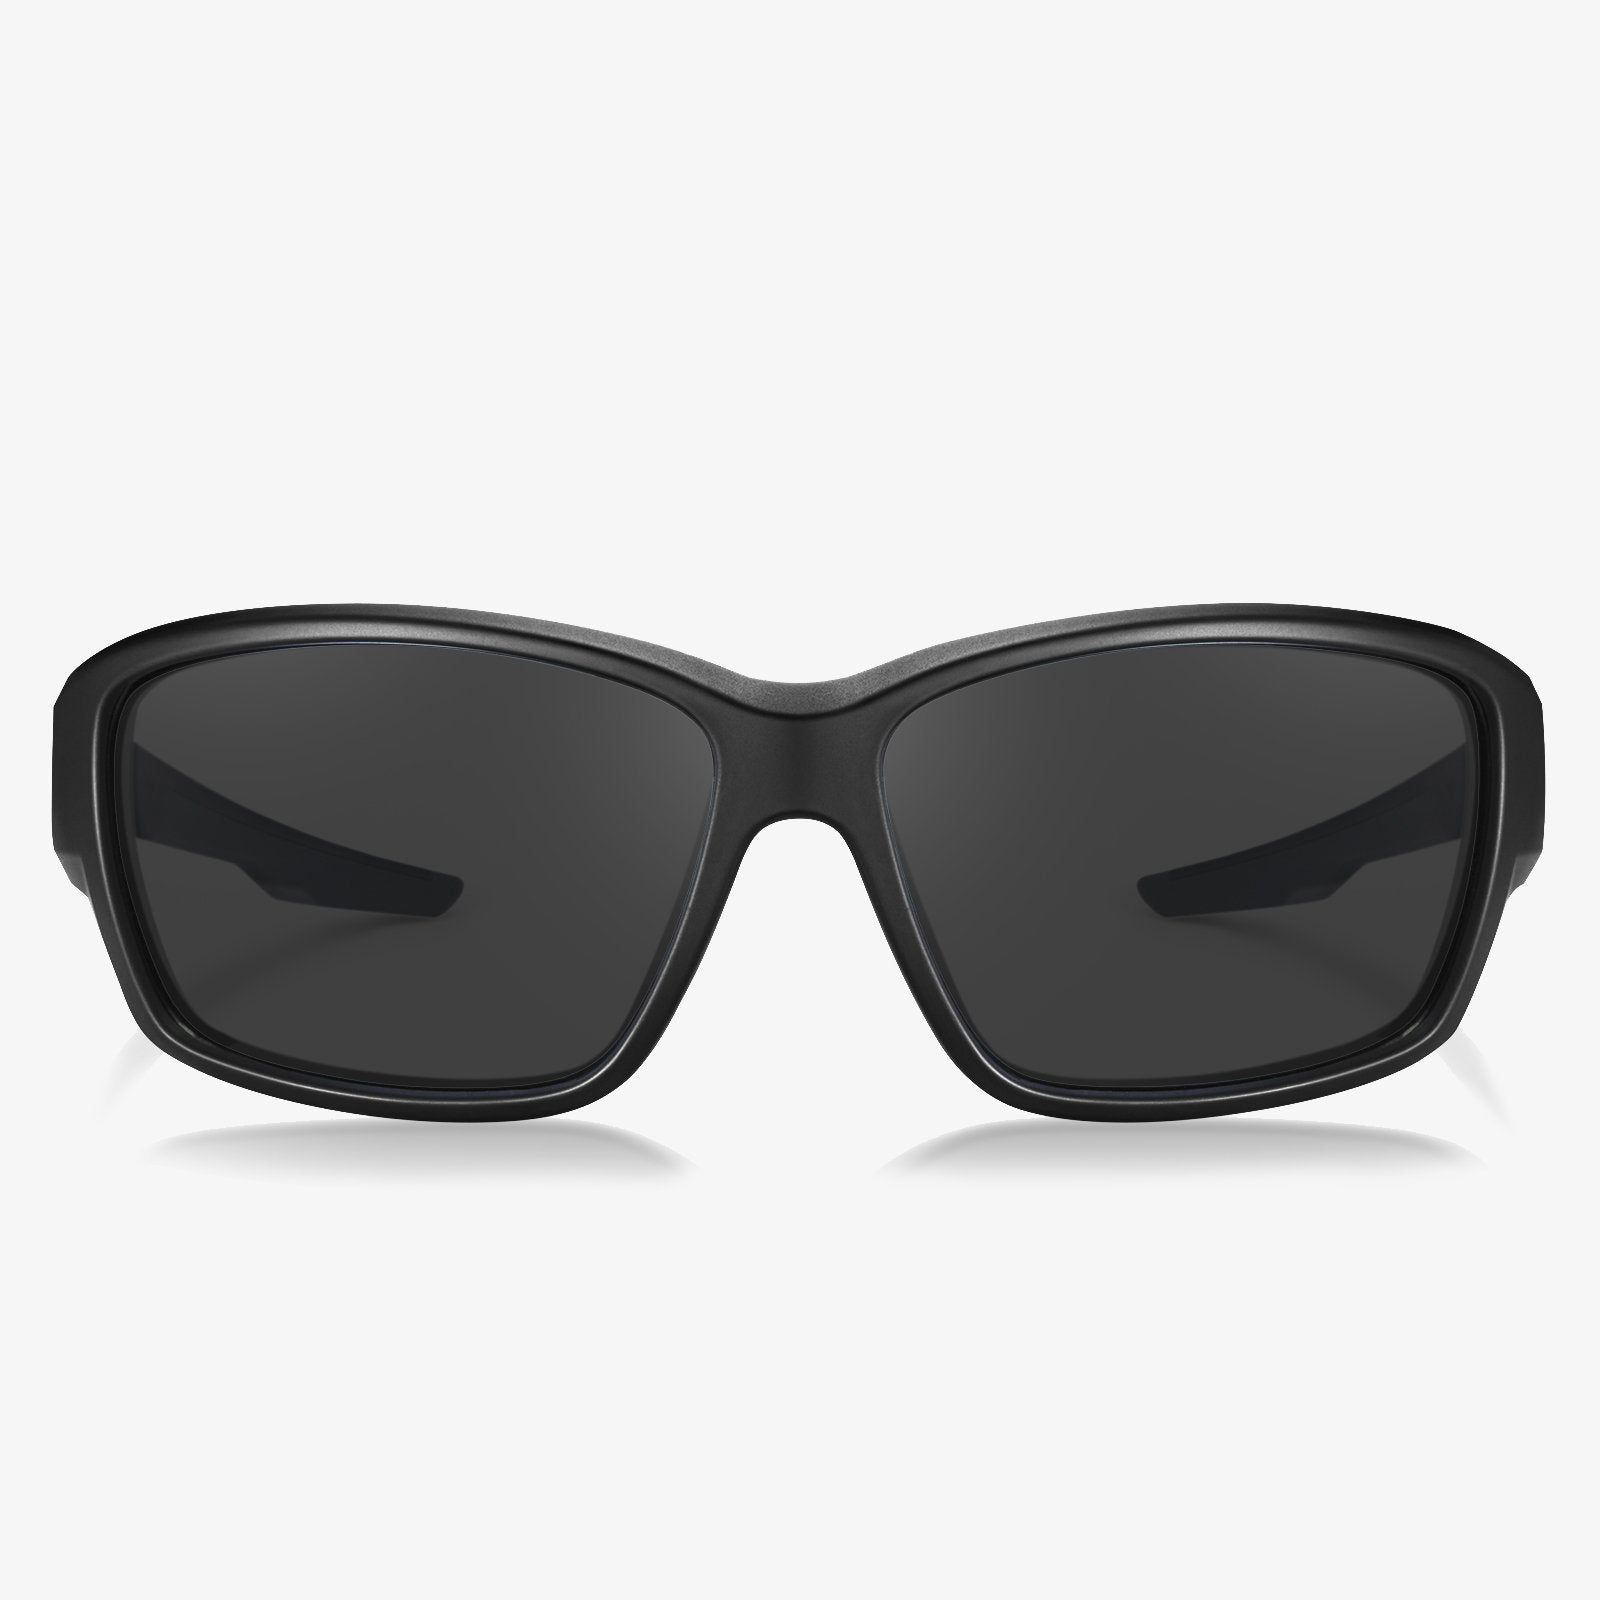 Sports Sunglasses For Men  | KOALAEYE